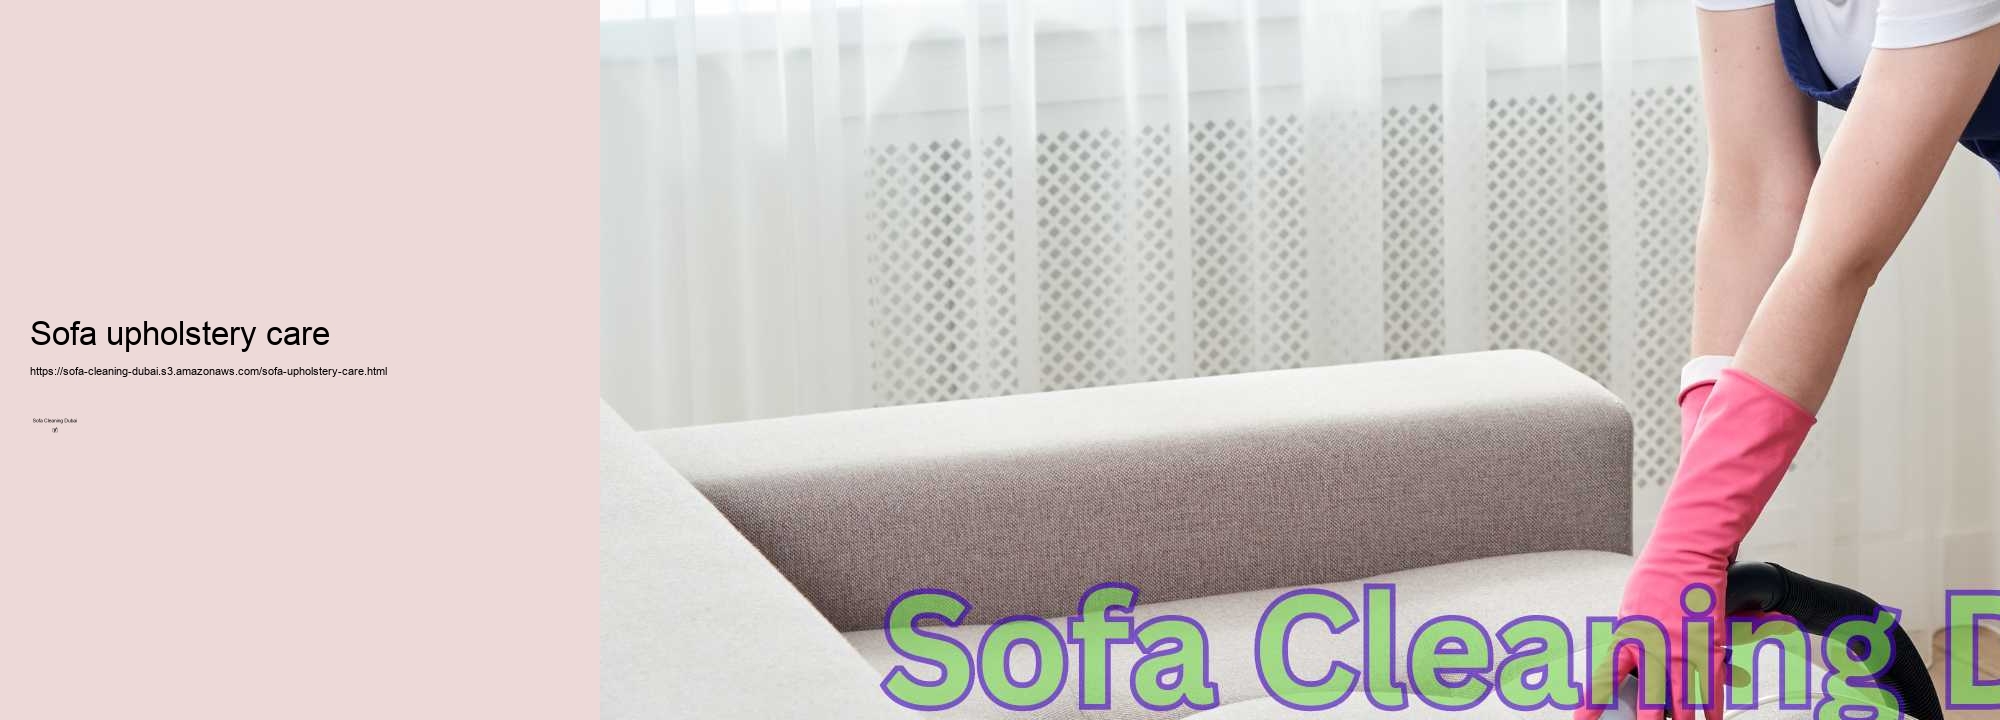 Sofa upholstery care